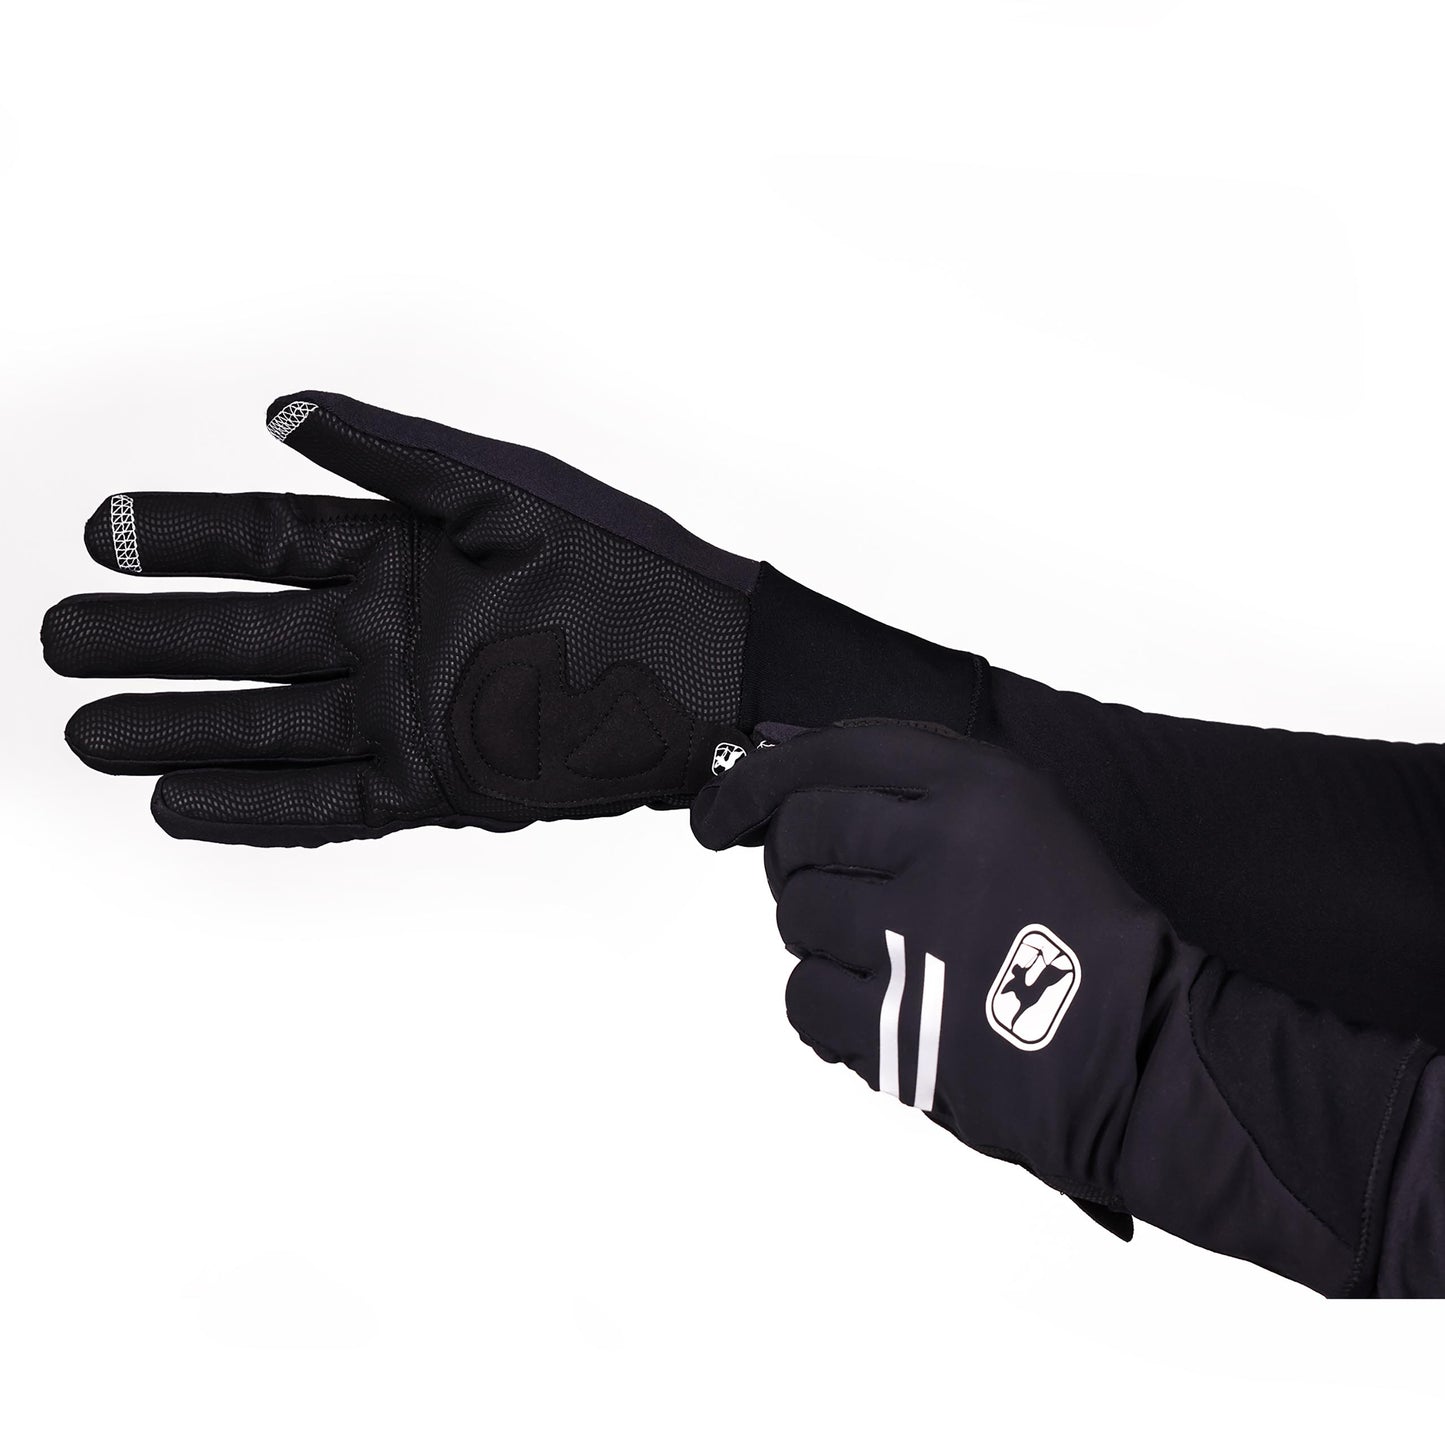 AV 200 Winter Handschuh schwarz